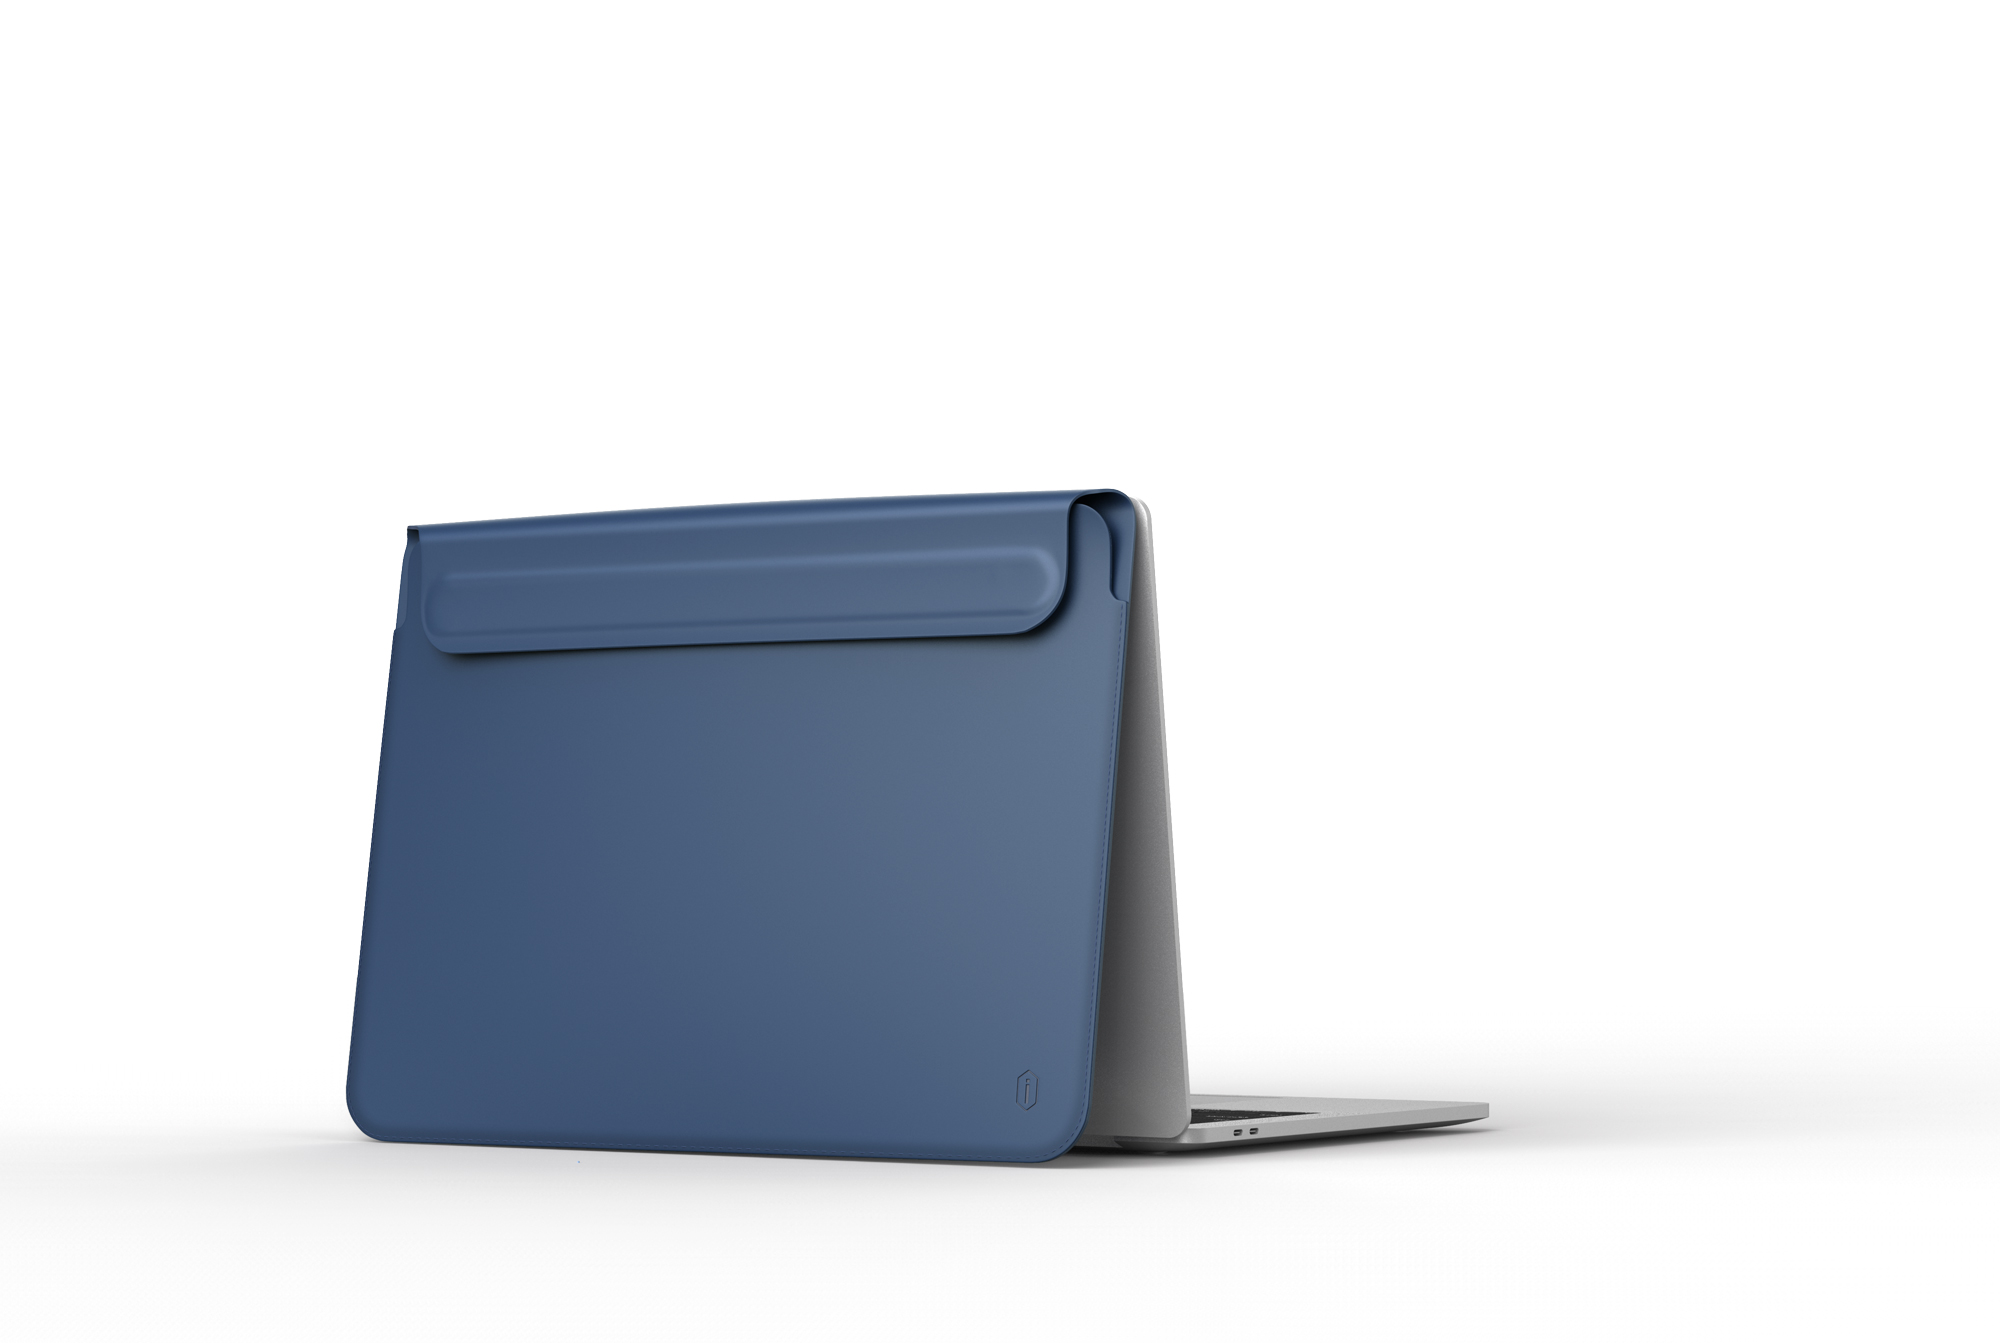 WiWU Skin Pro 13-16 Inch Universal Soft PU Leather Office Briefcase PU Envelope Laptop Macbook Case